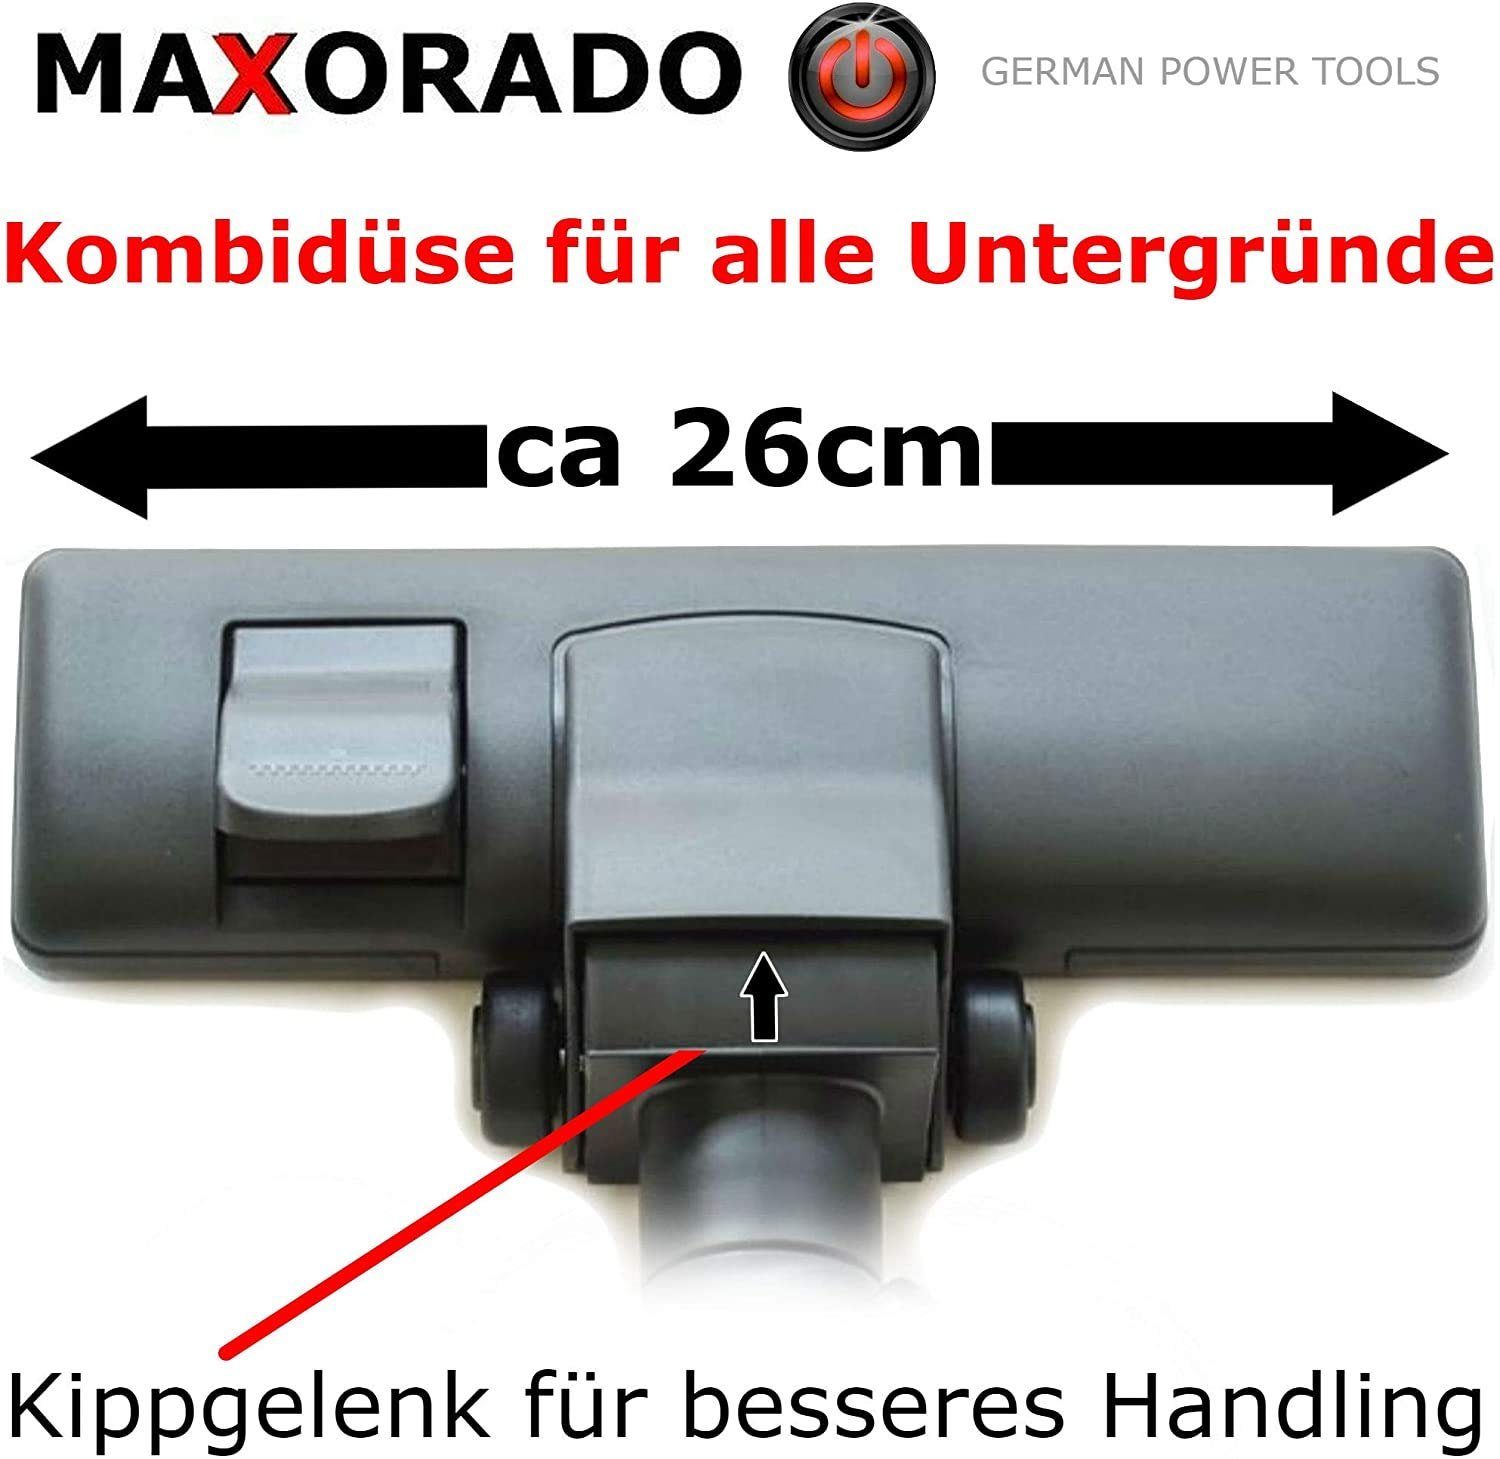 Maxorado Kombidüse Staubsauger-düse für S4 5000 SBD S Cat & 800 7100 Dog Miele 323i 285